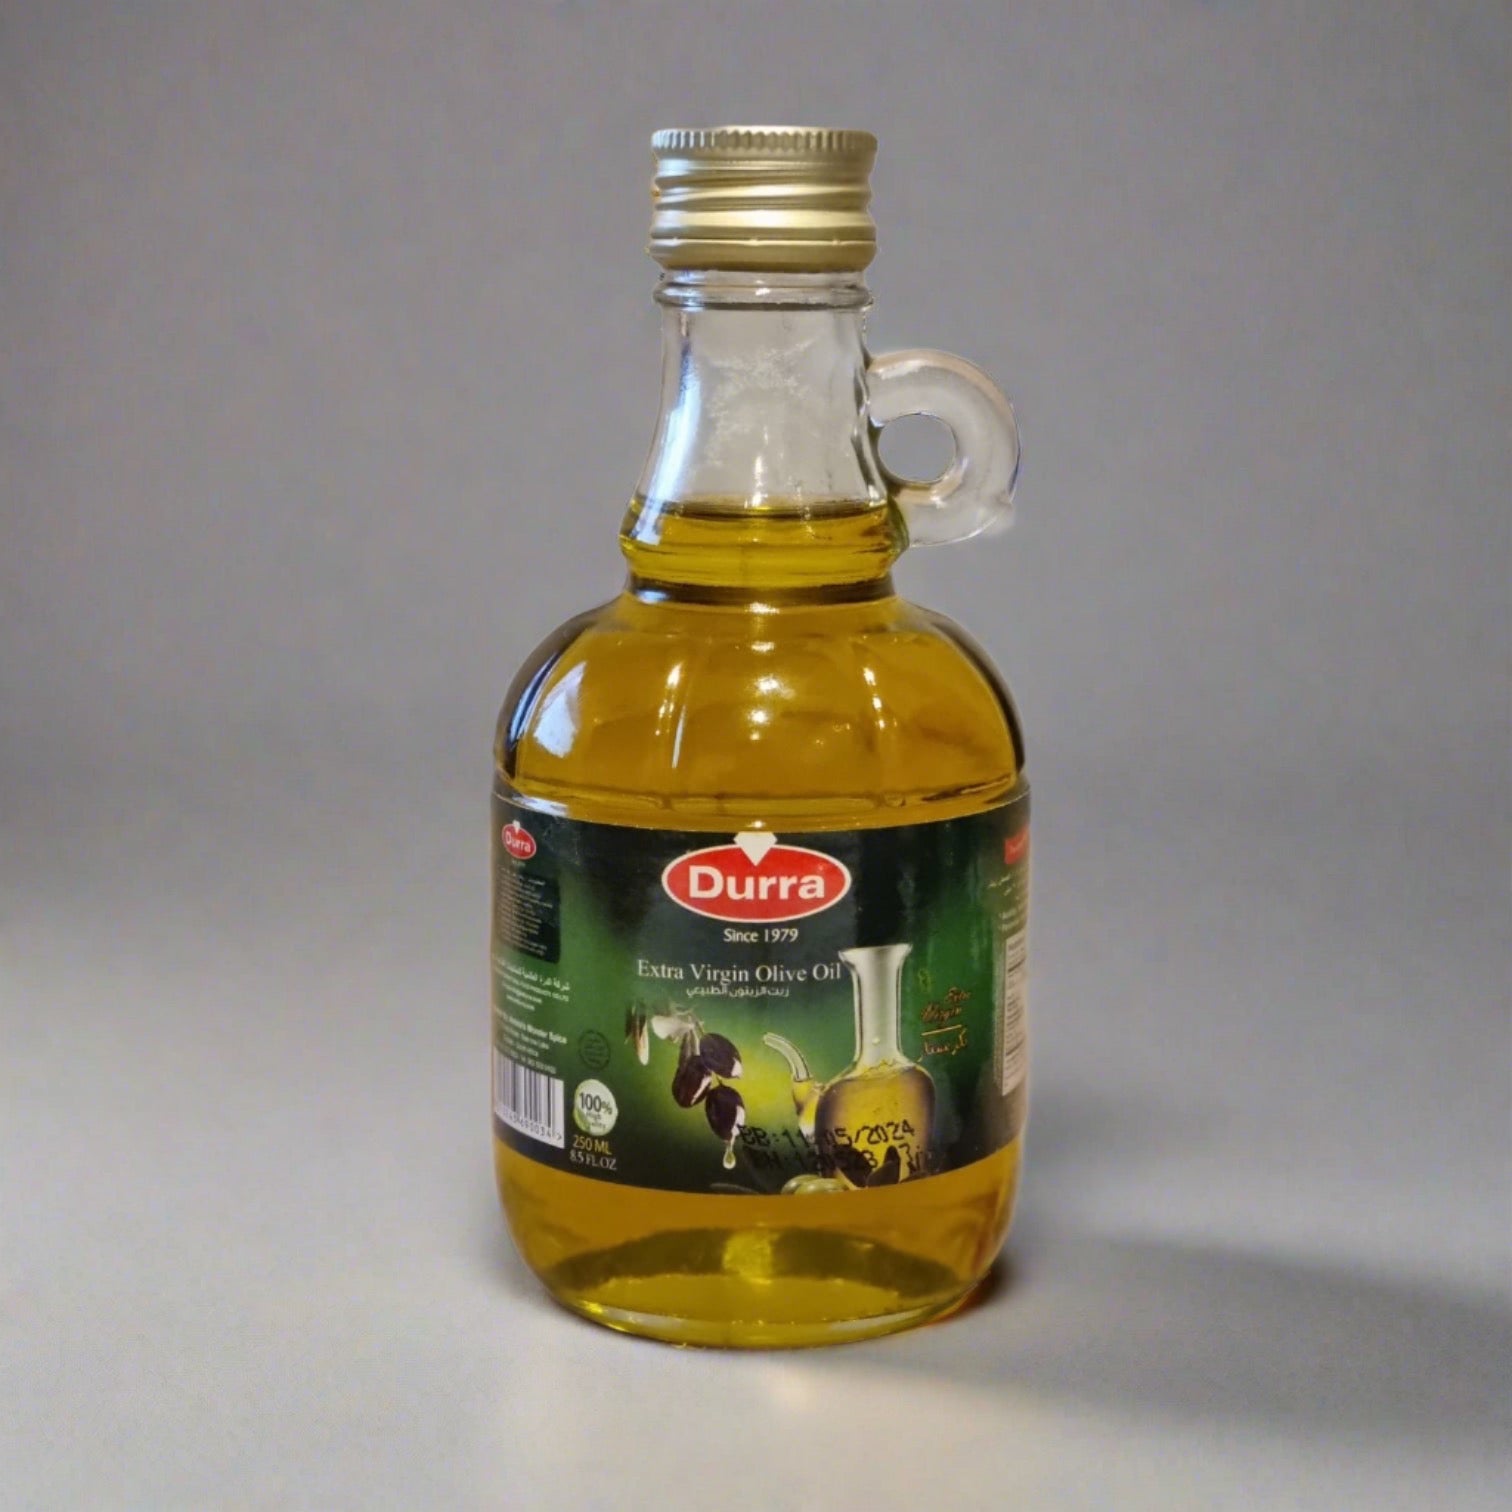 Durra Extra Virgin Olive Oil 250ml